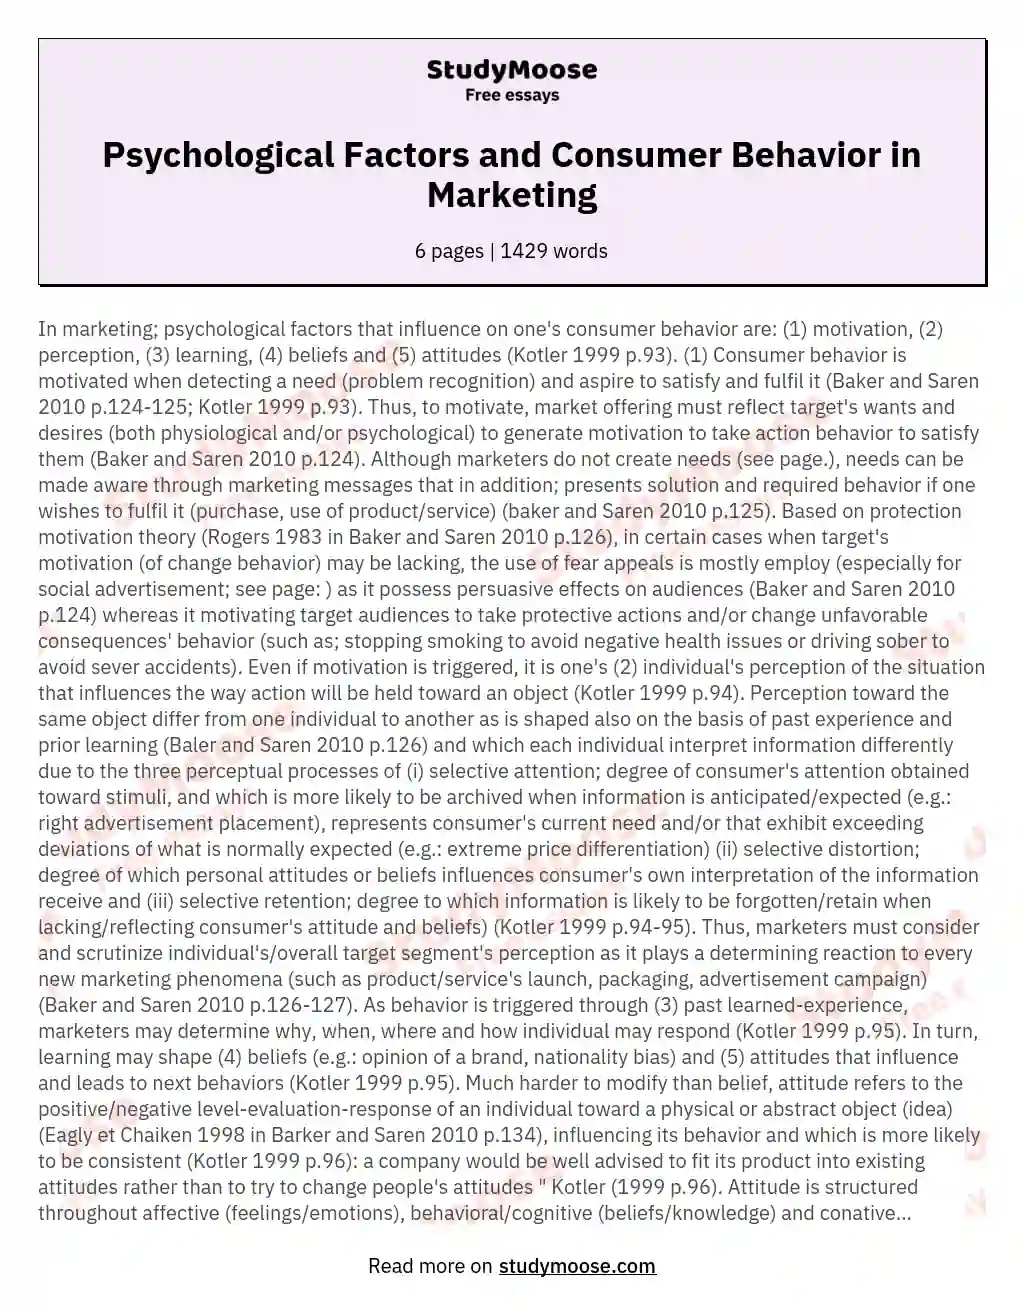 Psychological Factors and Consumer Behavior in Marketing